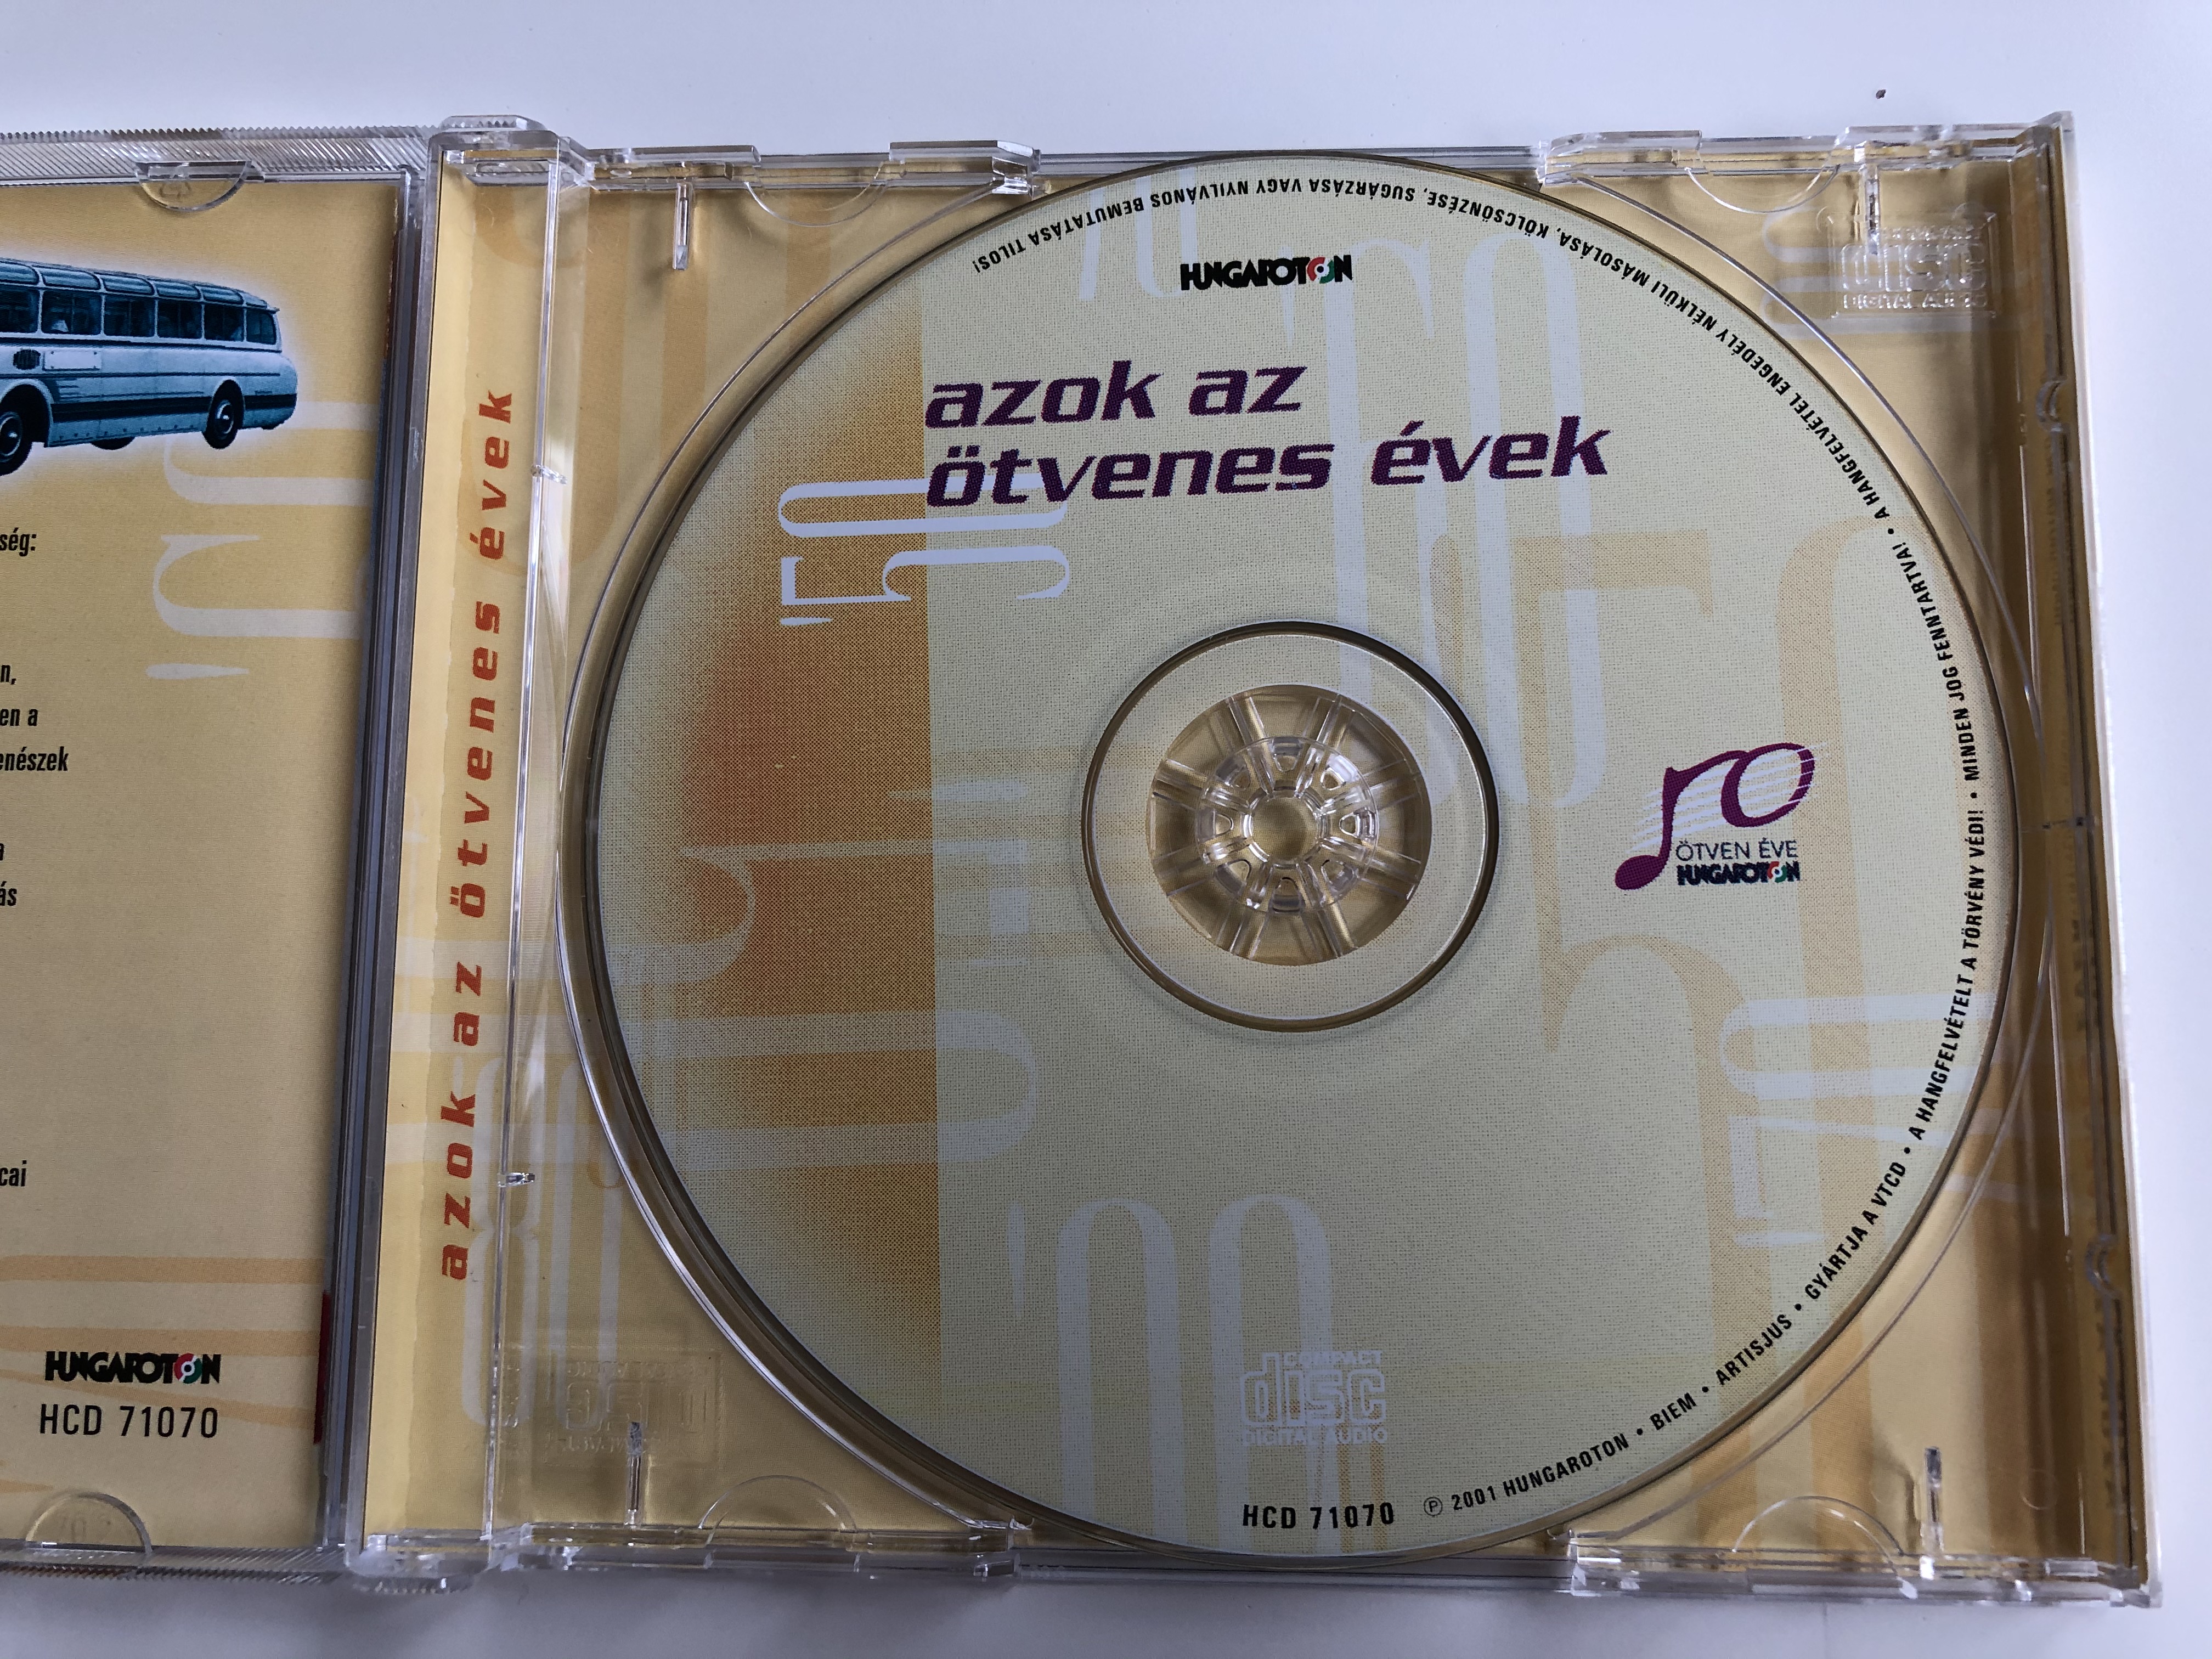 azok-a-tvenes-vek-hungaroton-audio-cd-2001-hcd-71070-5-.jpg